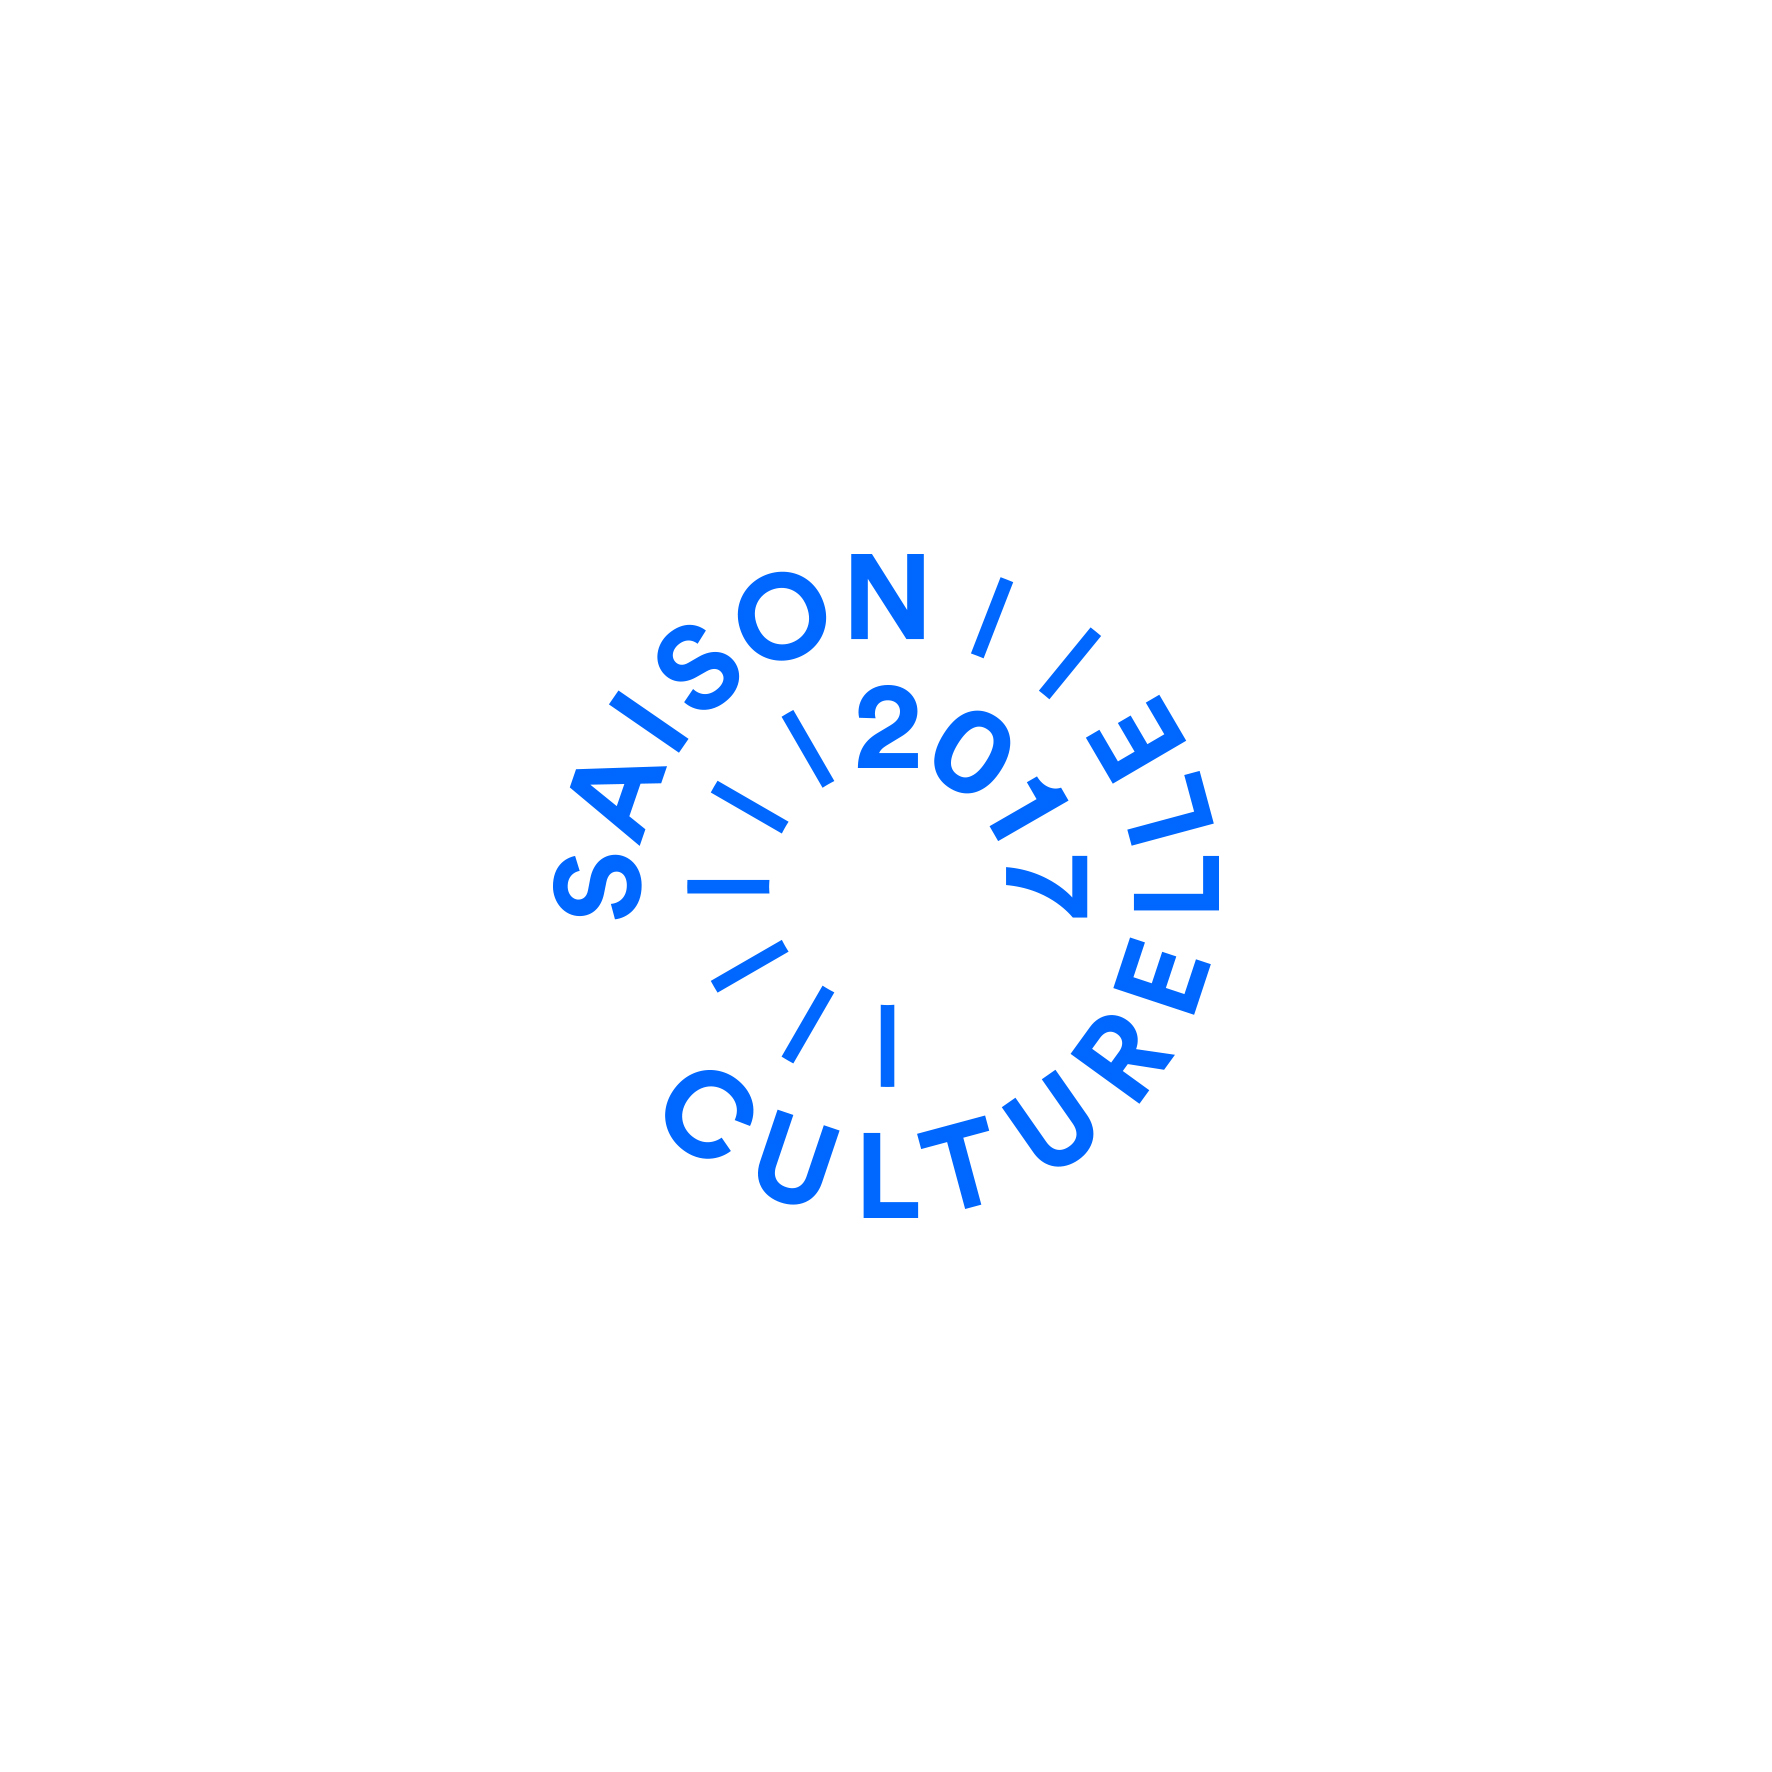 saisonculturelle2017_logo_rvb_bleu.jpg